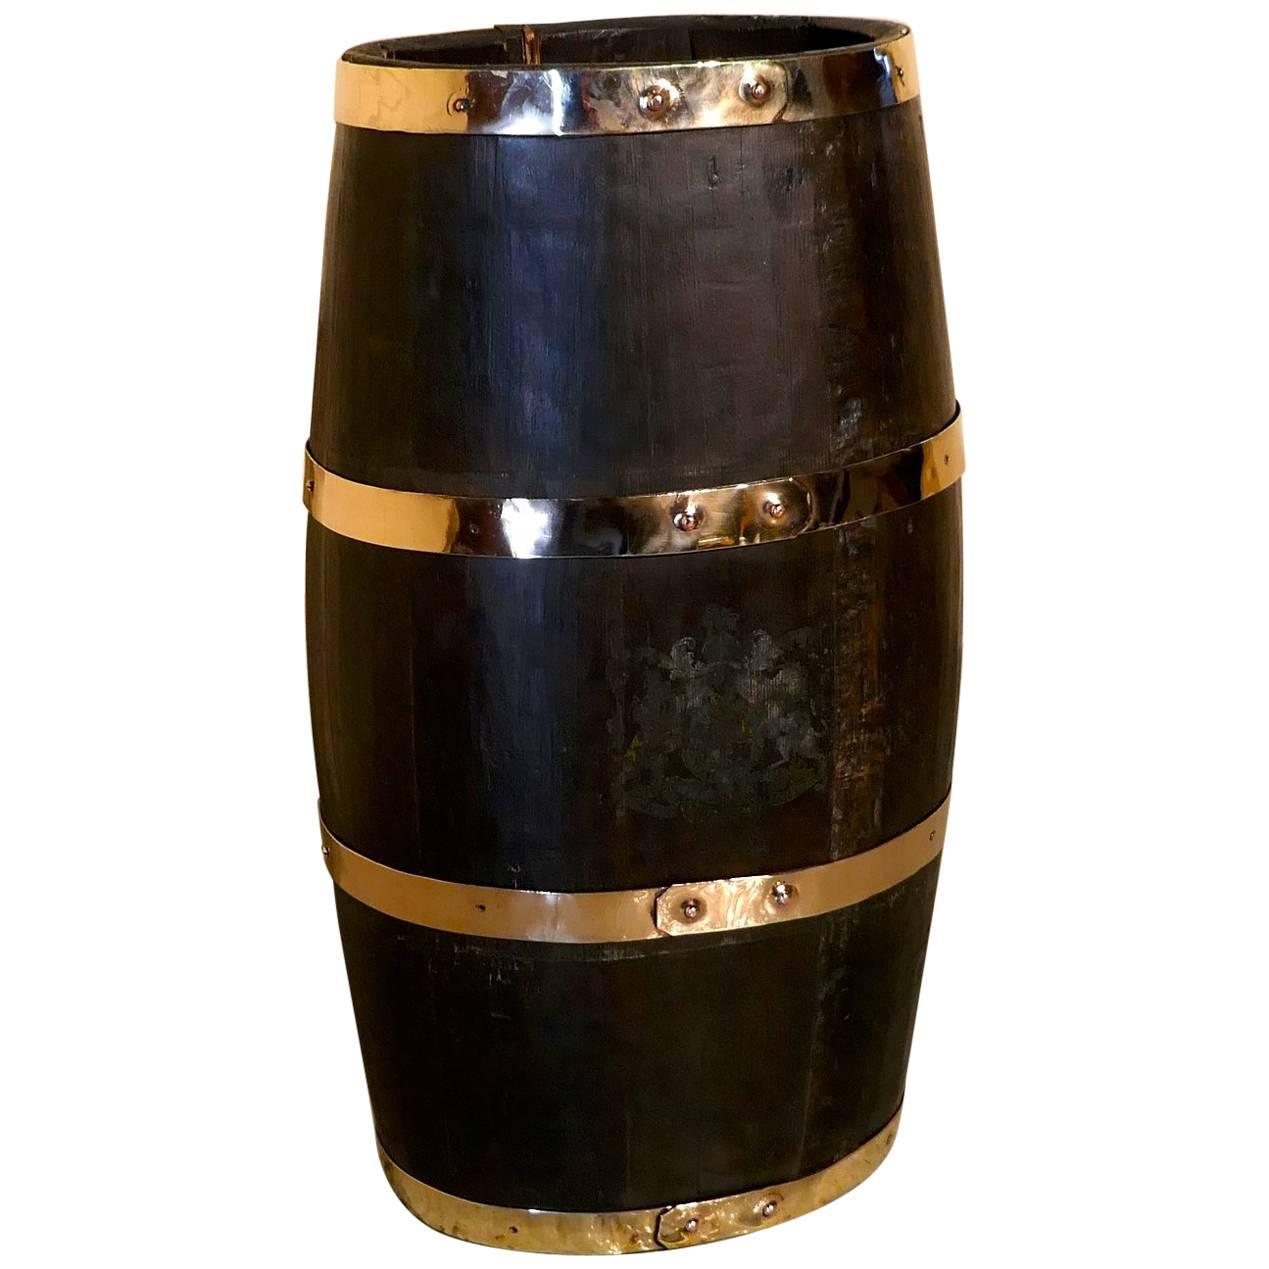 Large 18th Century Royal Navy Oak and Brass Bound Powder Barrel